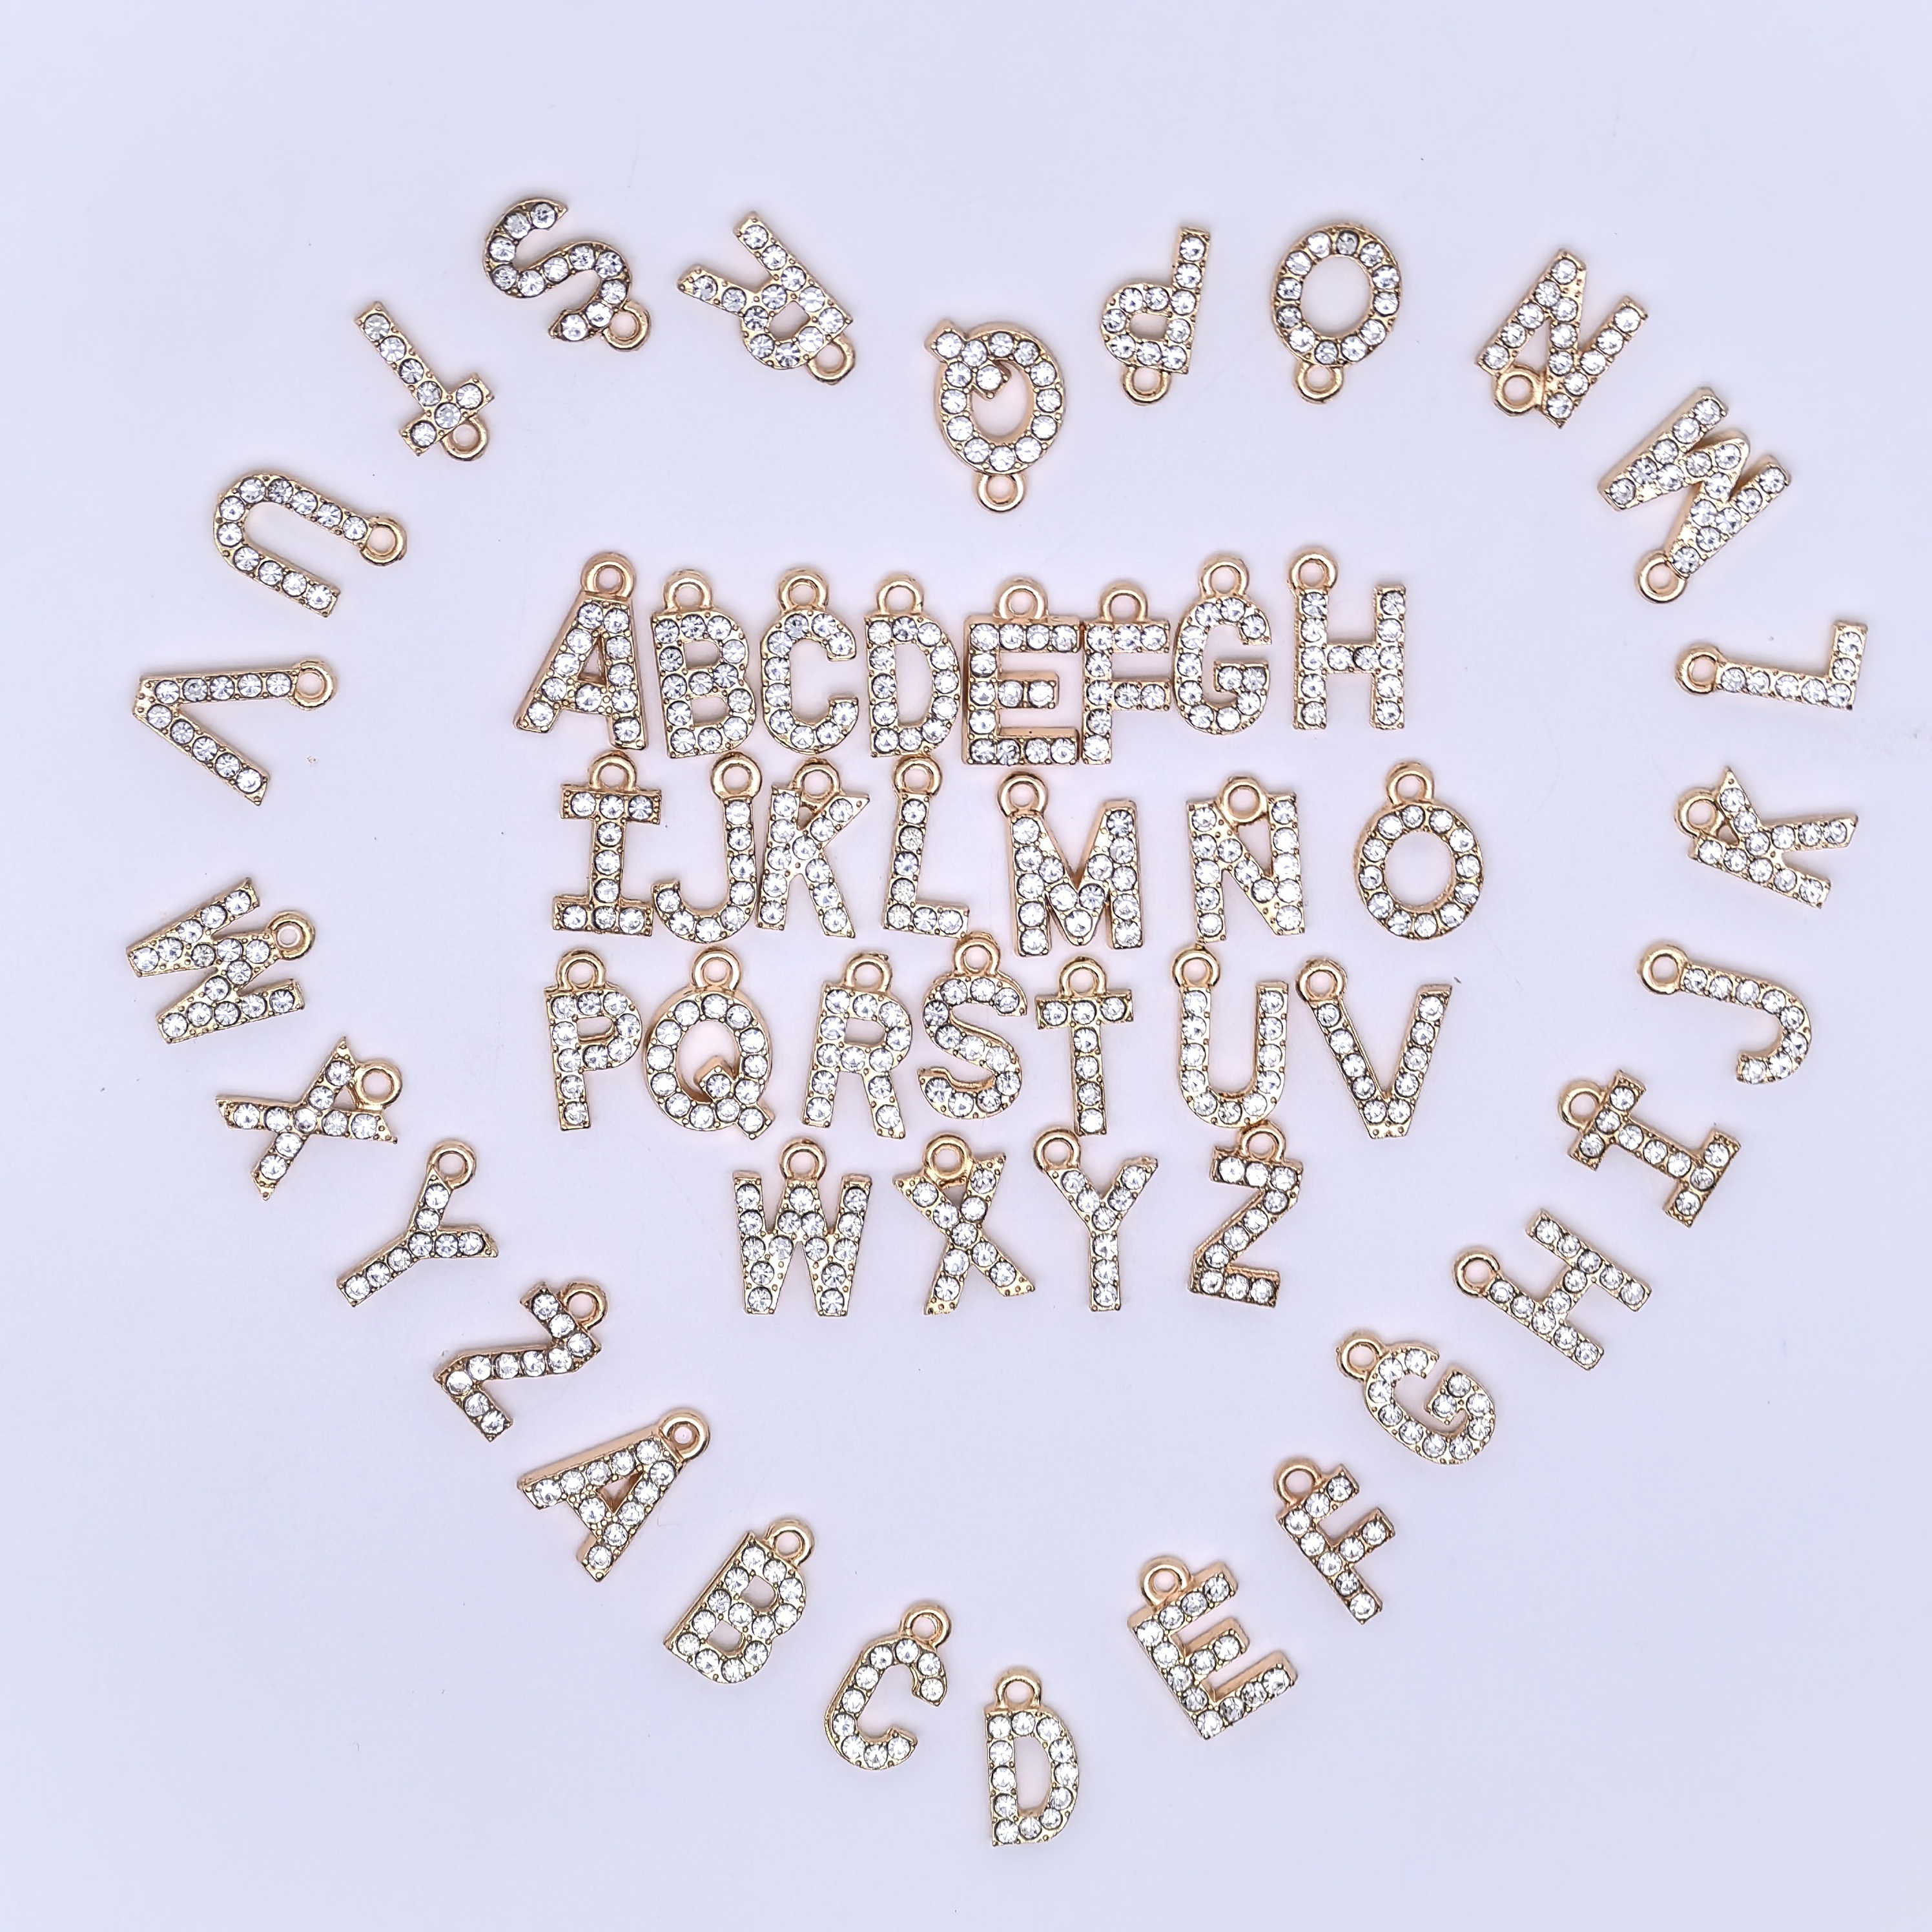 

26pcs Inlaid Rhinestone Alphabet Pendant Letter Pendant Charms For Diy Necklace Bracelet Making Jewelry Accessories